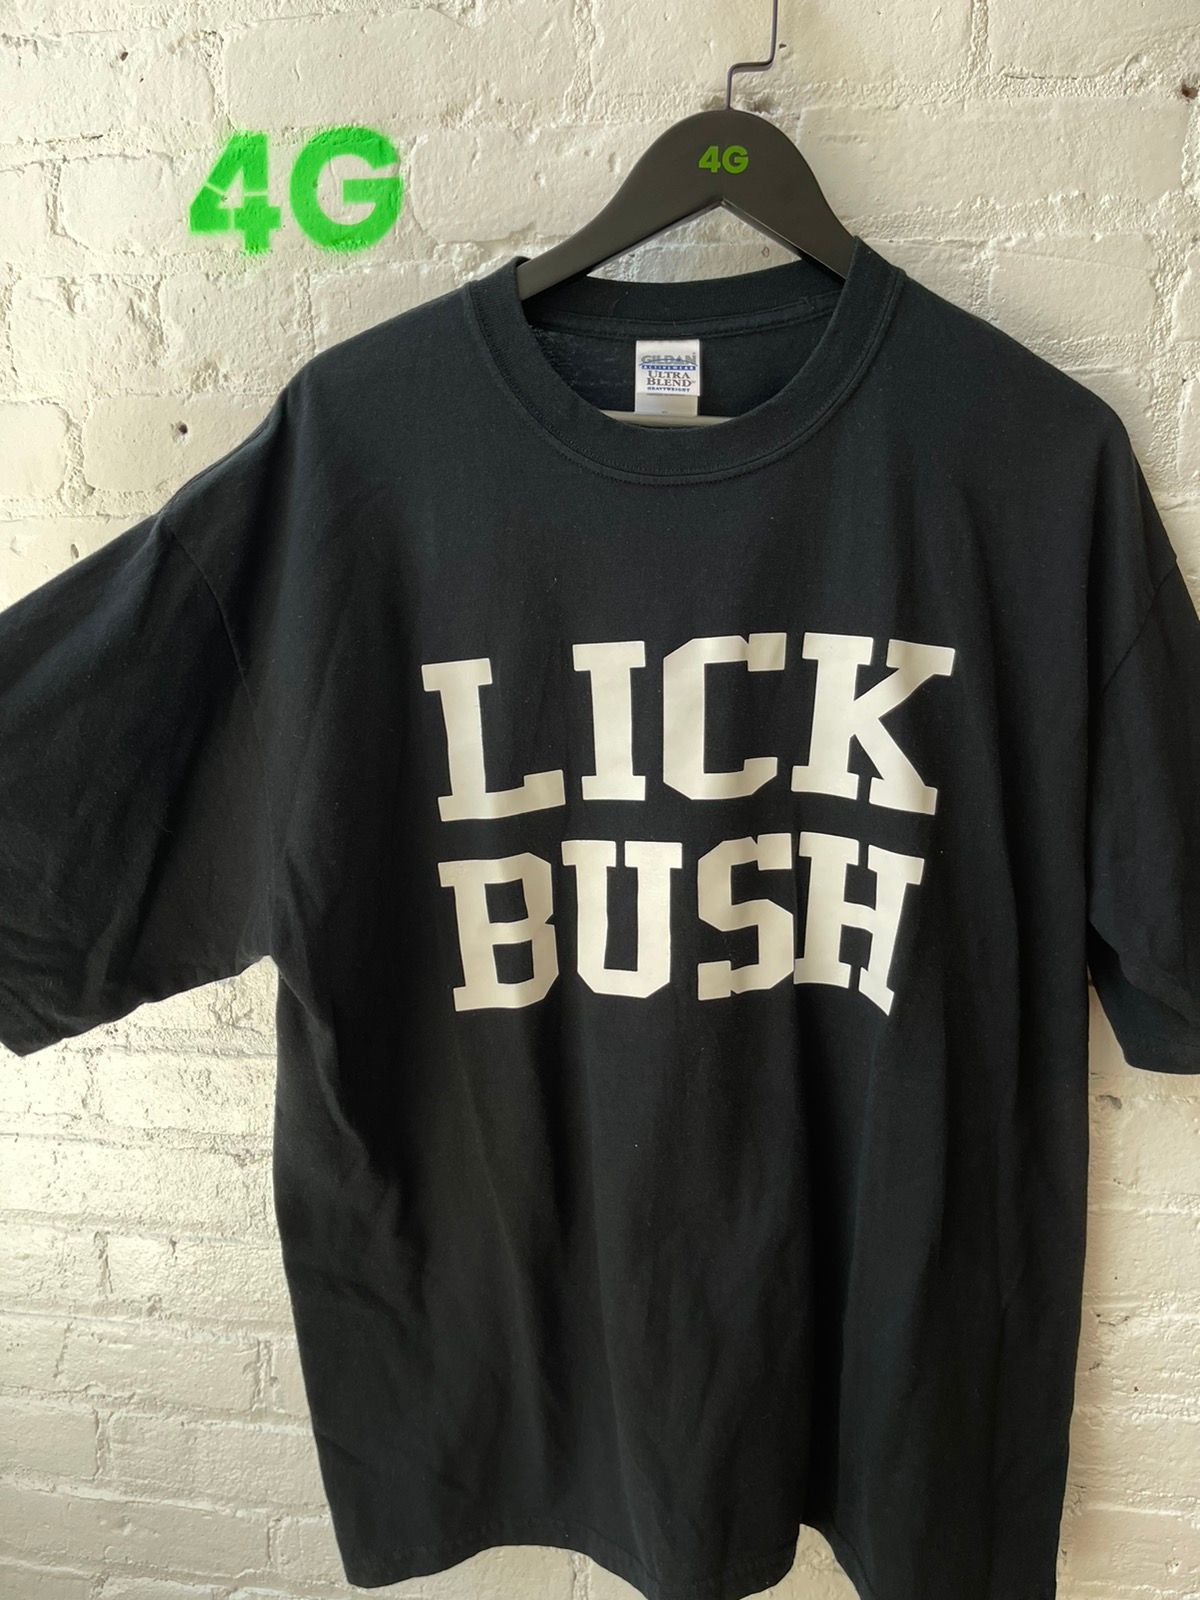 Vintage Sex Perverted Shirt LICK BUSH !! Porn